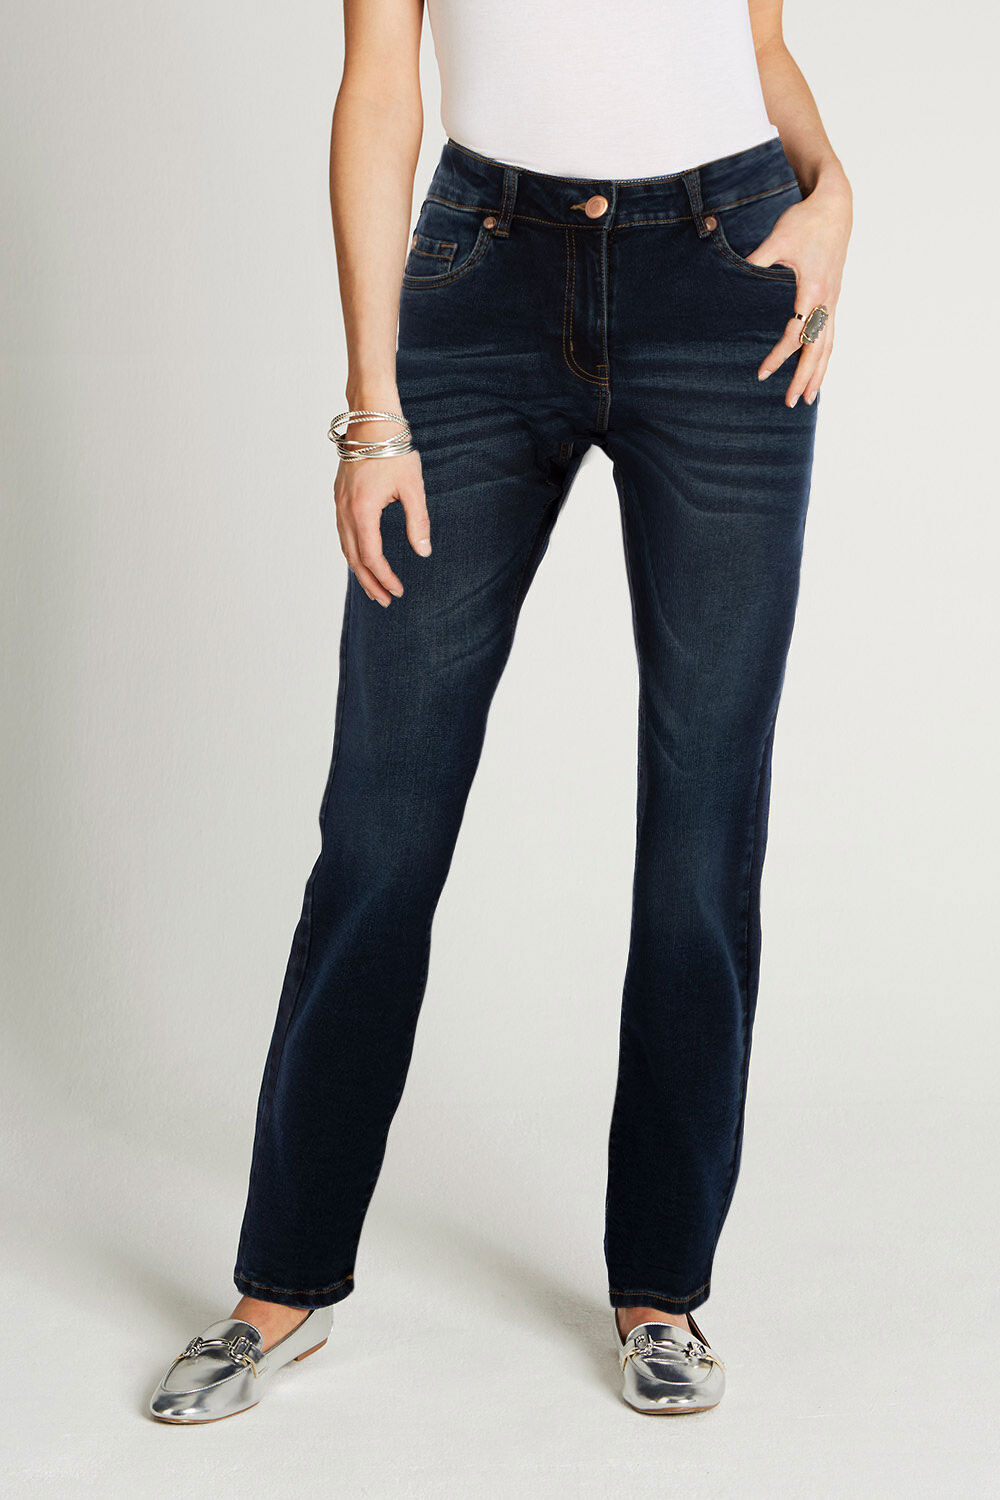 Bonmarche Indigo Premium Slim Leg Jeans, Size: 28